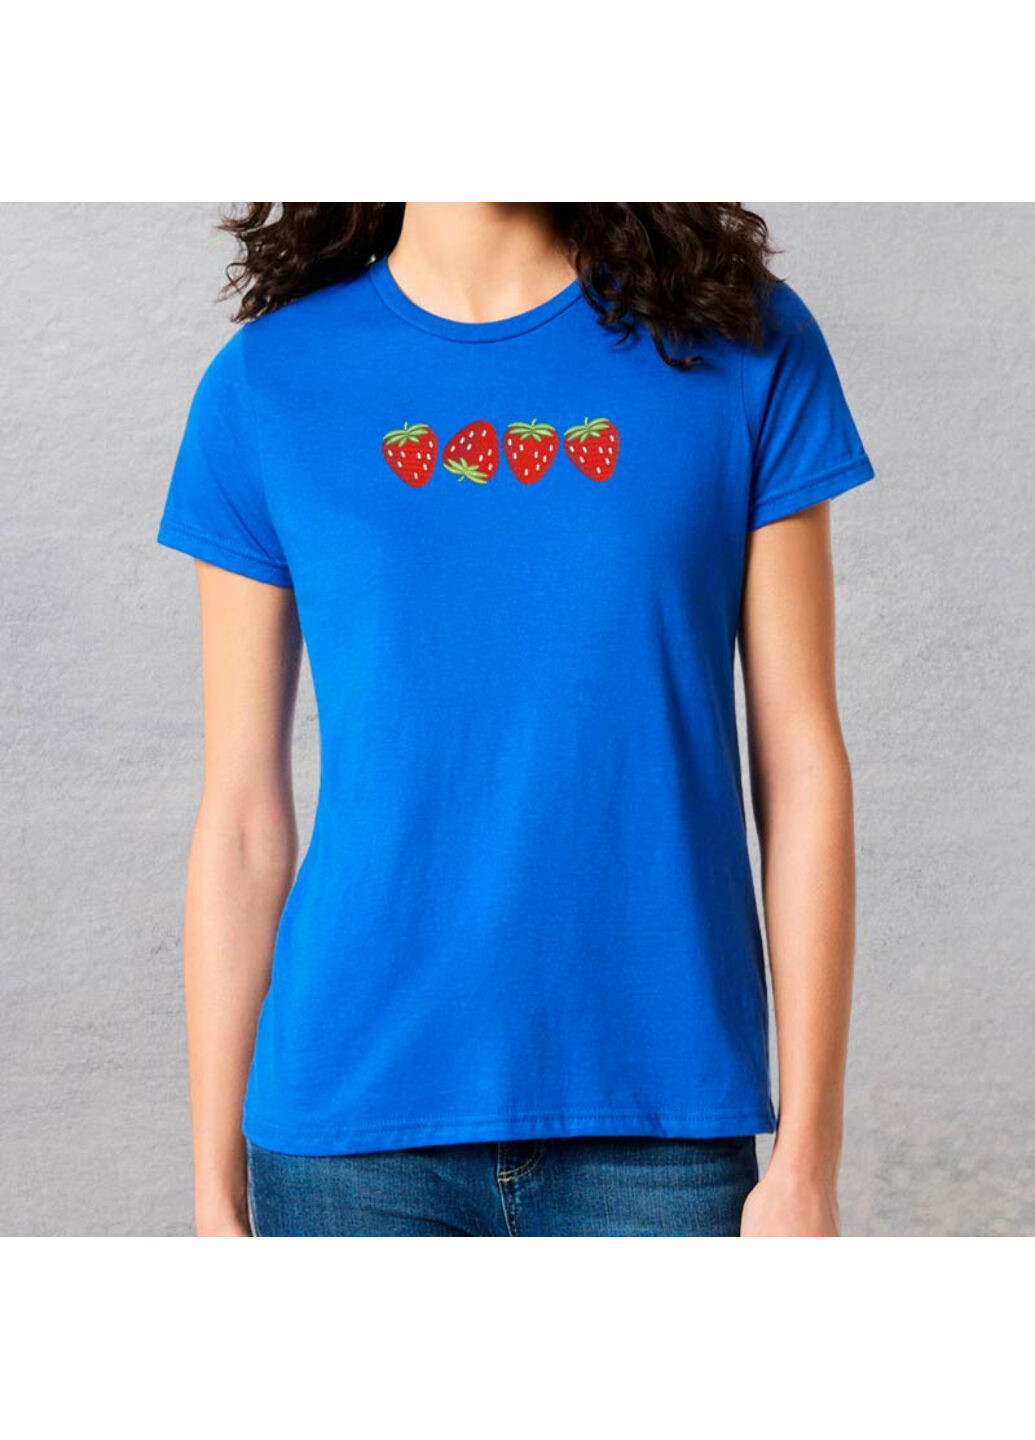 Синяя футболка з вишивкою полуничка 02-1 женская синий xl No Brand